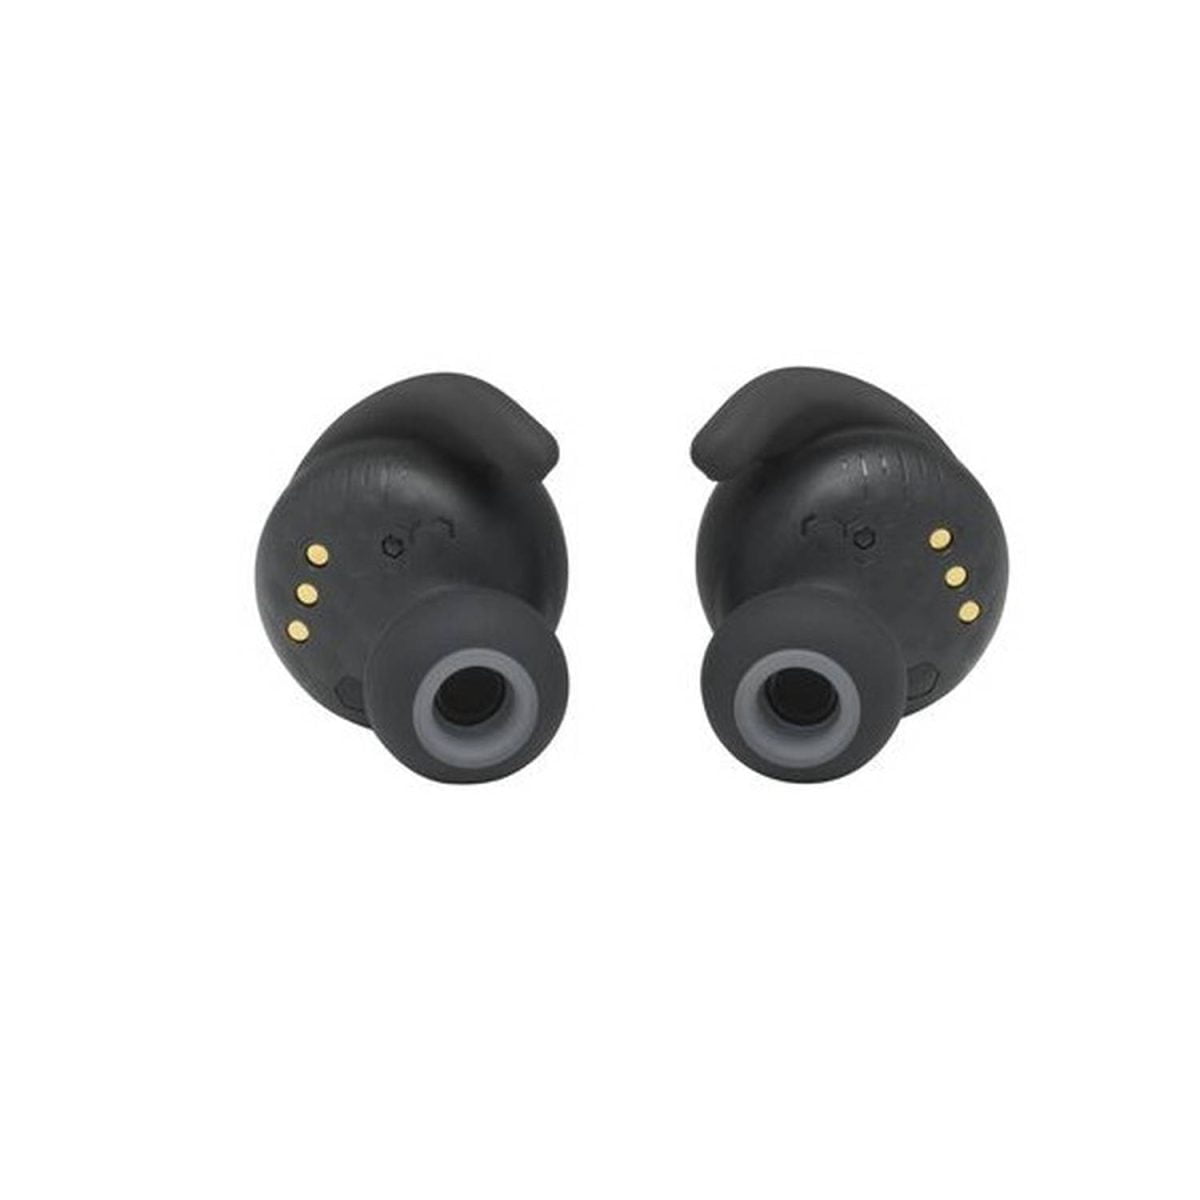 A2 Wwo1Xoo Smart Crop C0 5 0 5 1500X1500 70 Jbl &Lt;H1 Class=&Quot;Product-Title&Quot;&Gt;Jbl Reflect Mini Nc Waterproof True Wireless In-Ear Sport Headphones&Lt;/H1&Gt; Https://Www.youtube.com/Watch?V=X6X4Ai97Rq8 &Lt;Ul&Gt; &Lt;Li&Gt;Active Noise Cancelling With Smart Ambient&Lt;/Li&Gt; &Lt;Li&Gt;21 Hours Of Playtime (7 Hours In Buds / 14 Hours In Case) Active Noise Cancelling&Lt;/Li&Gt; &Lt;Li&Gt;Ear Fin For Secure Fit&Lt;/Li&Gt; &Lt;Li&Gt;Multi Ai Built In&Lt;/Li&Gt; &Lt;Li&Gt;Waterproof With Reflective Accents&Lt;/Li&Gt; &Lt;/Ul&Gt; Jbl Earphones Jbl Reflect Mini Nc Waterproof True Wireless In-Ear Sport Headphones